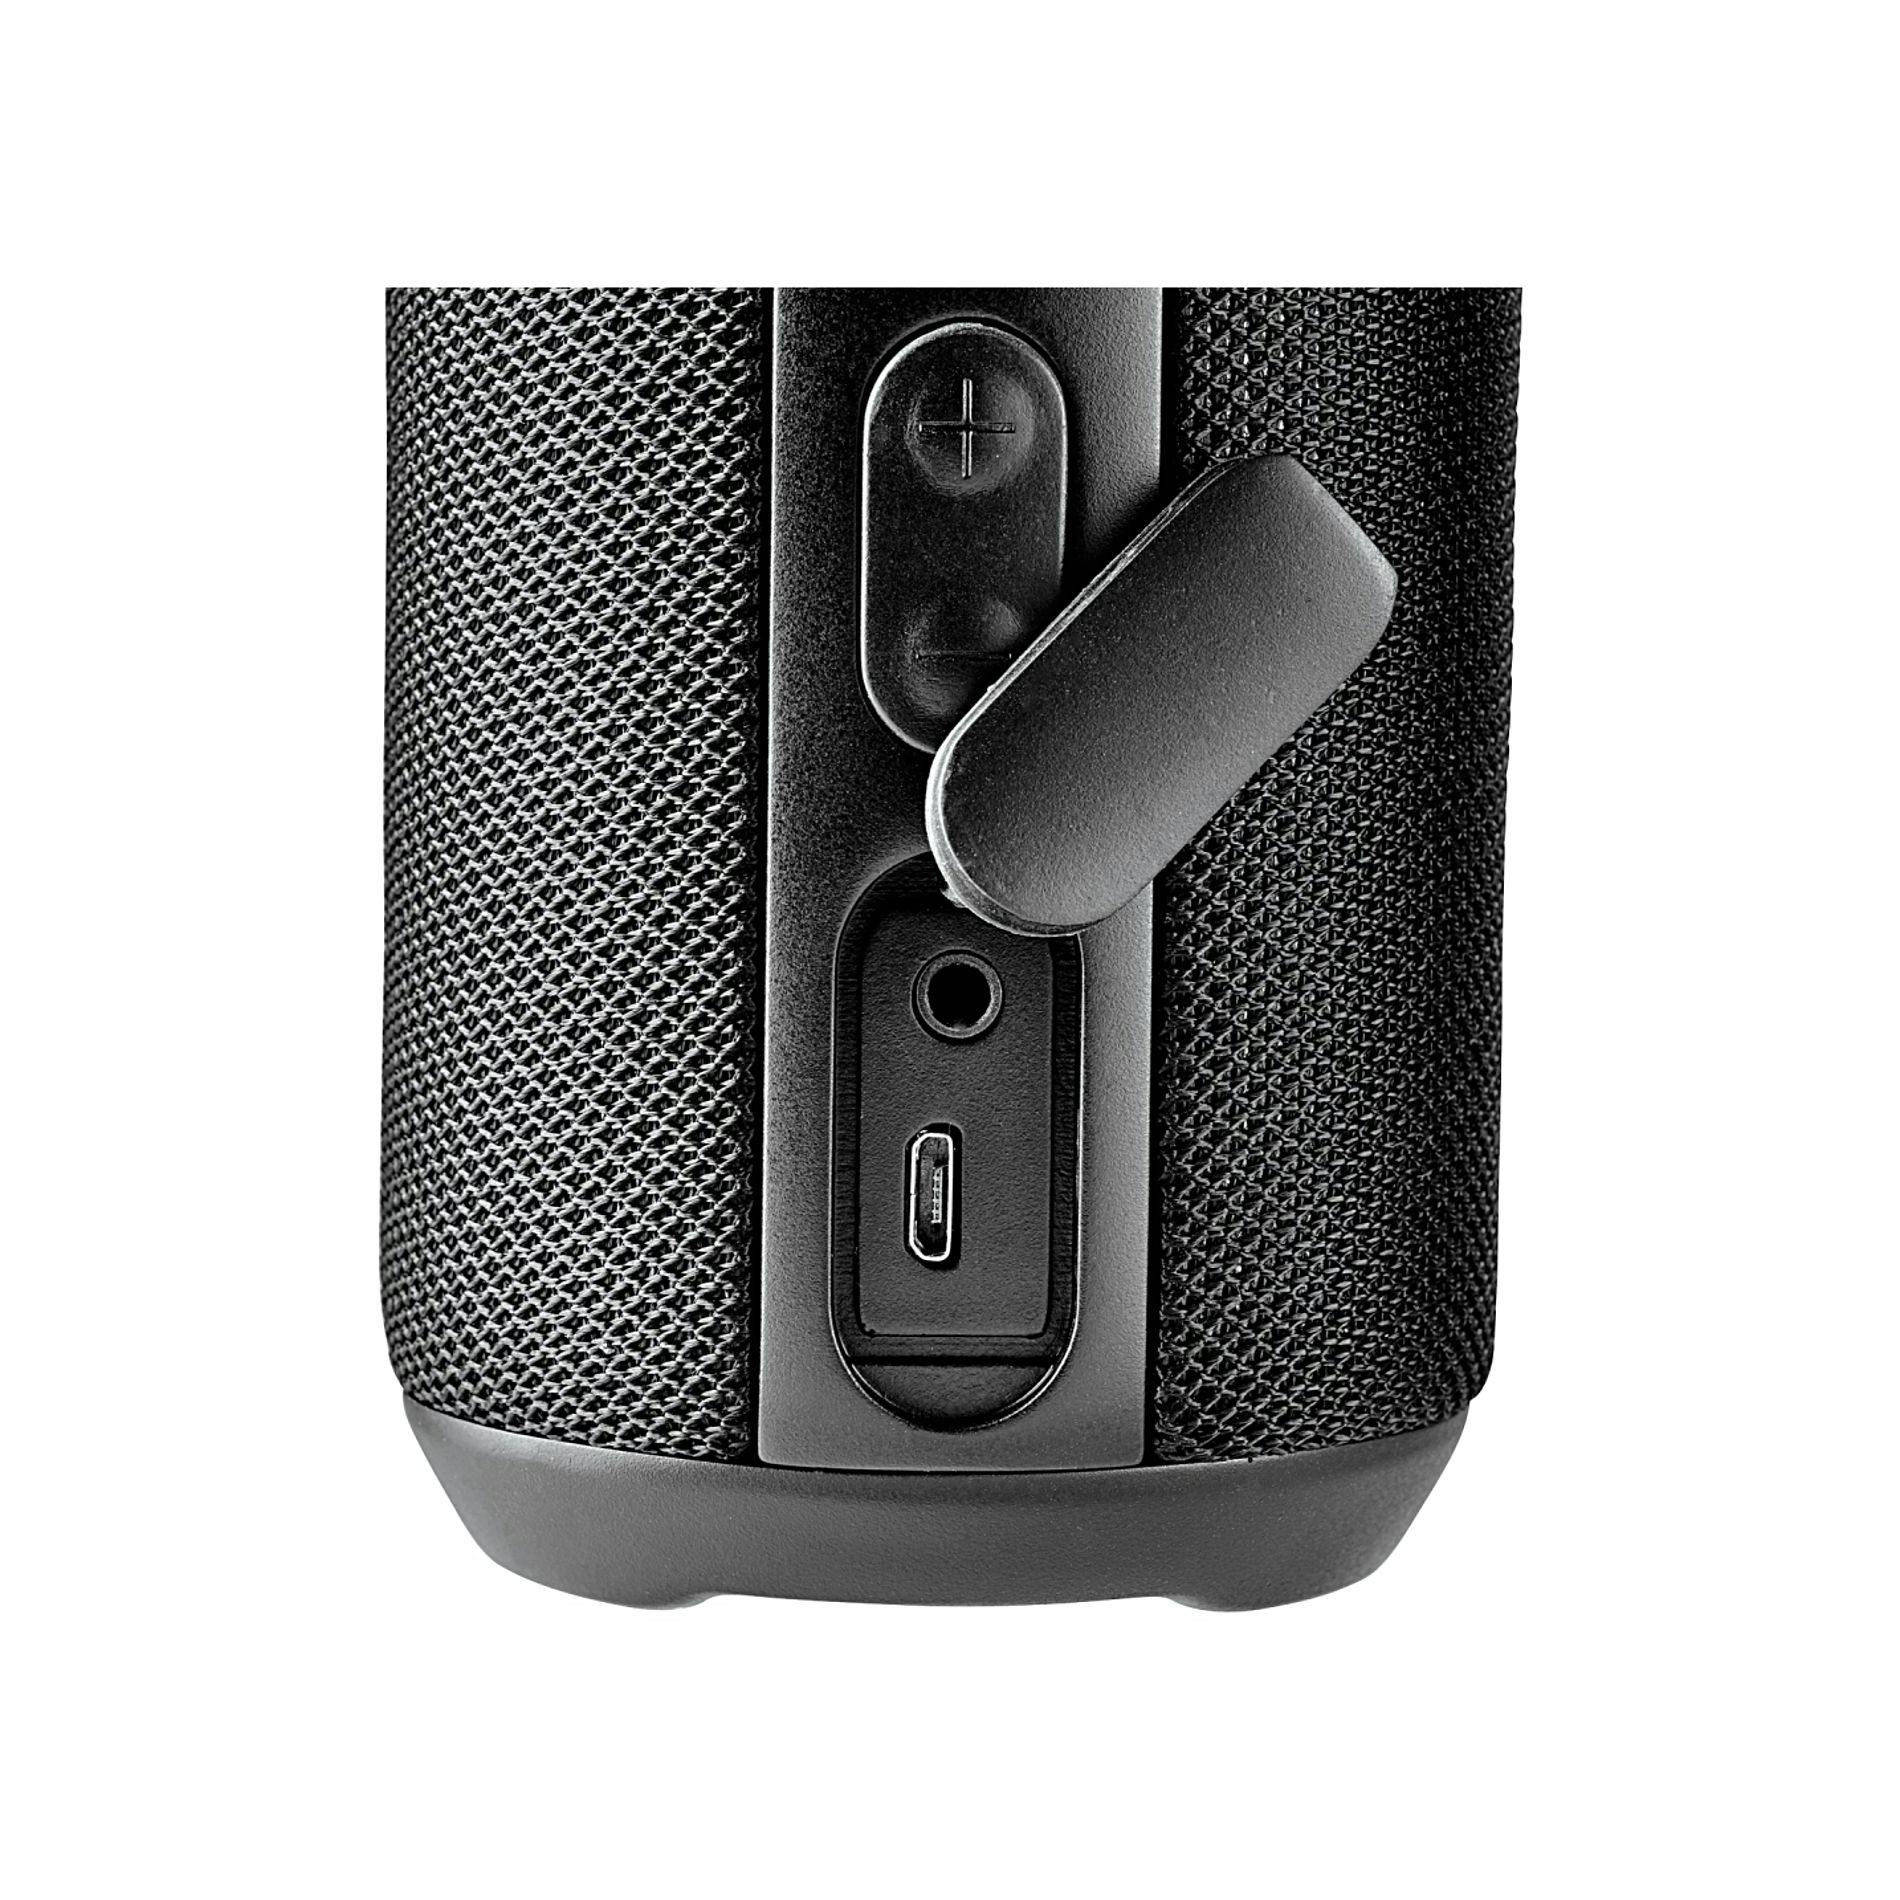 Rugged Fabric Outdoor Waterproof Bluetooth Speaker - additional Image 4